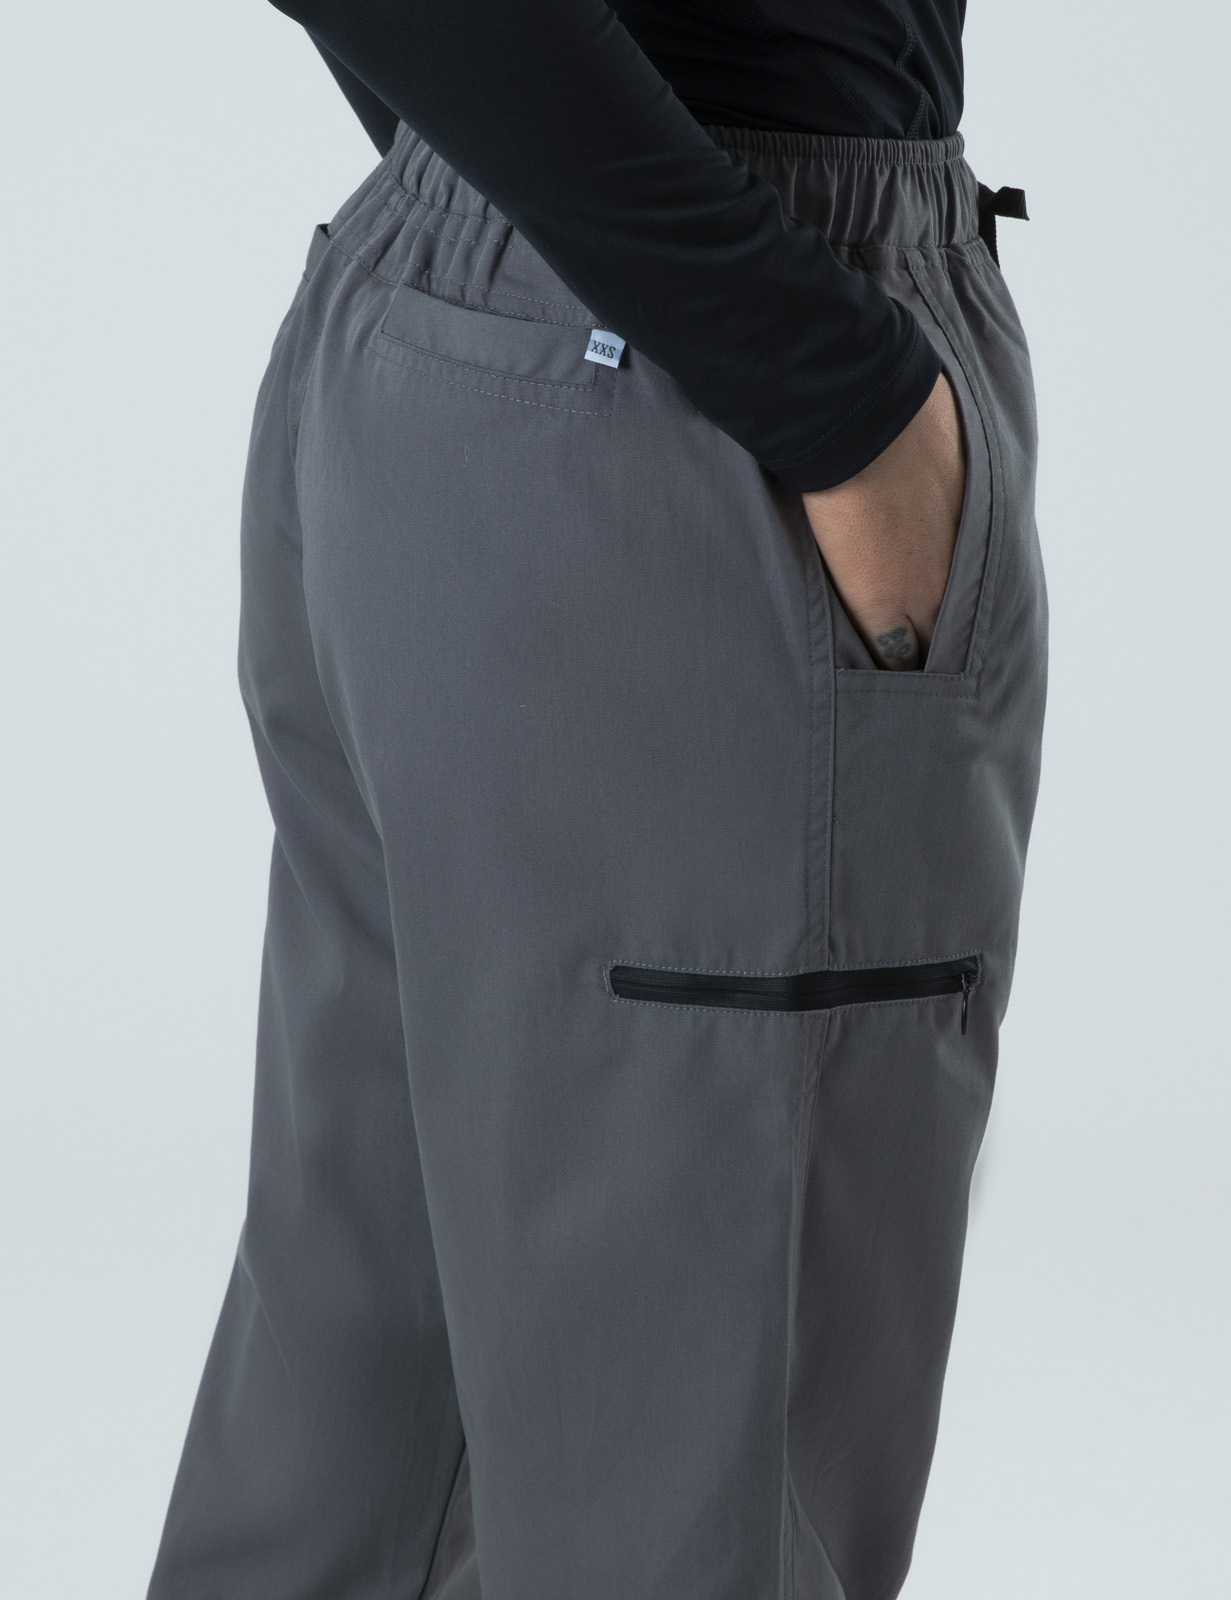 Women's Utility Pants - Steel Grey - Large - Tall - 2